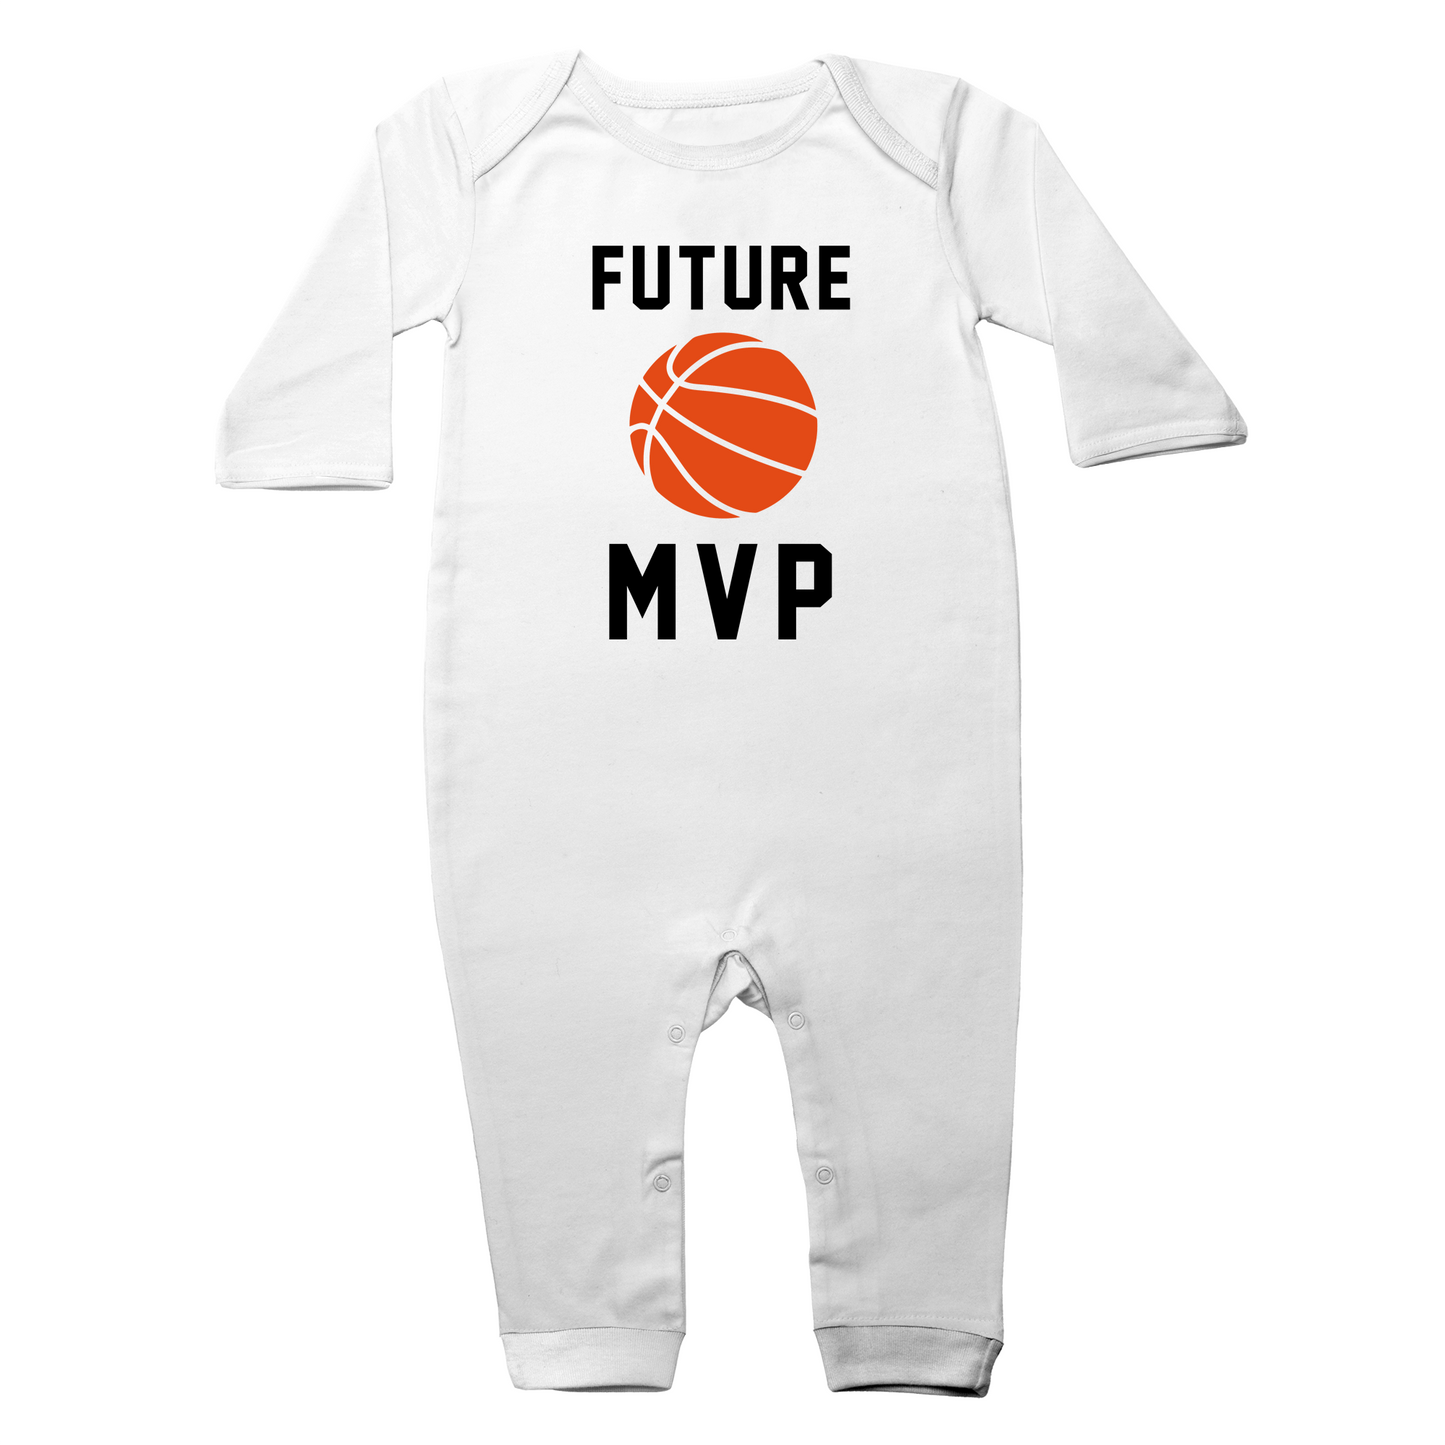 Zeronto Baby Gift Basket - Future MVP (Basketball)